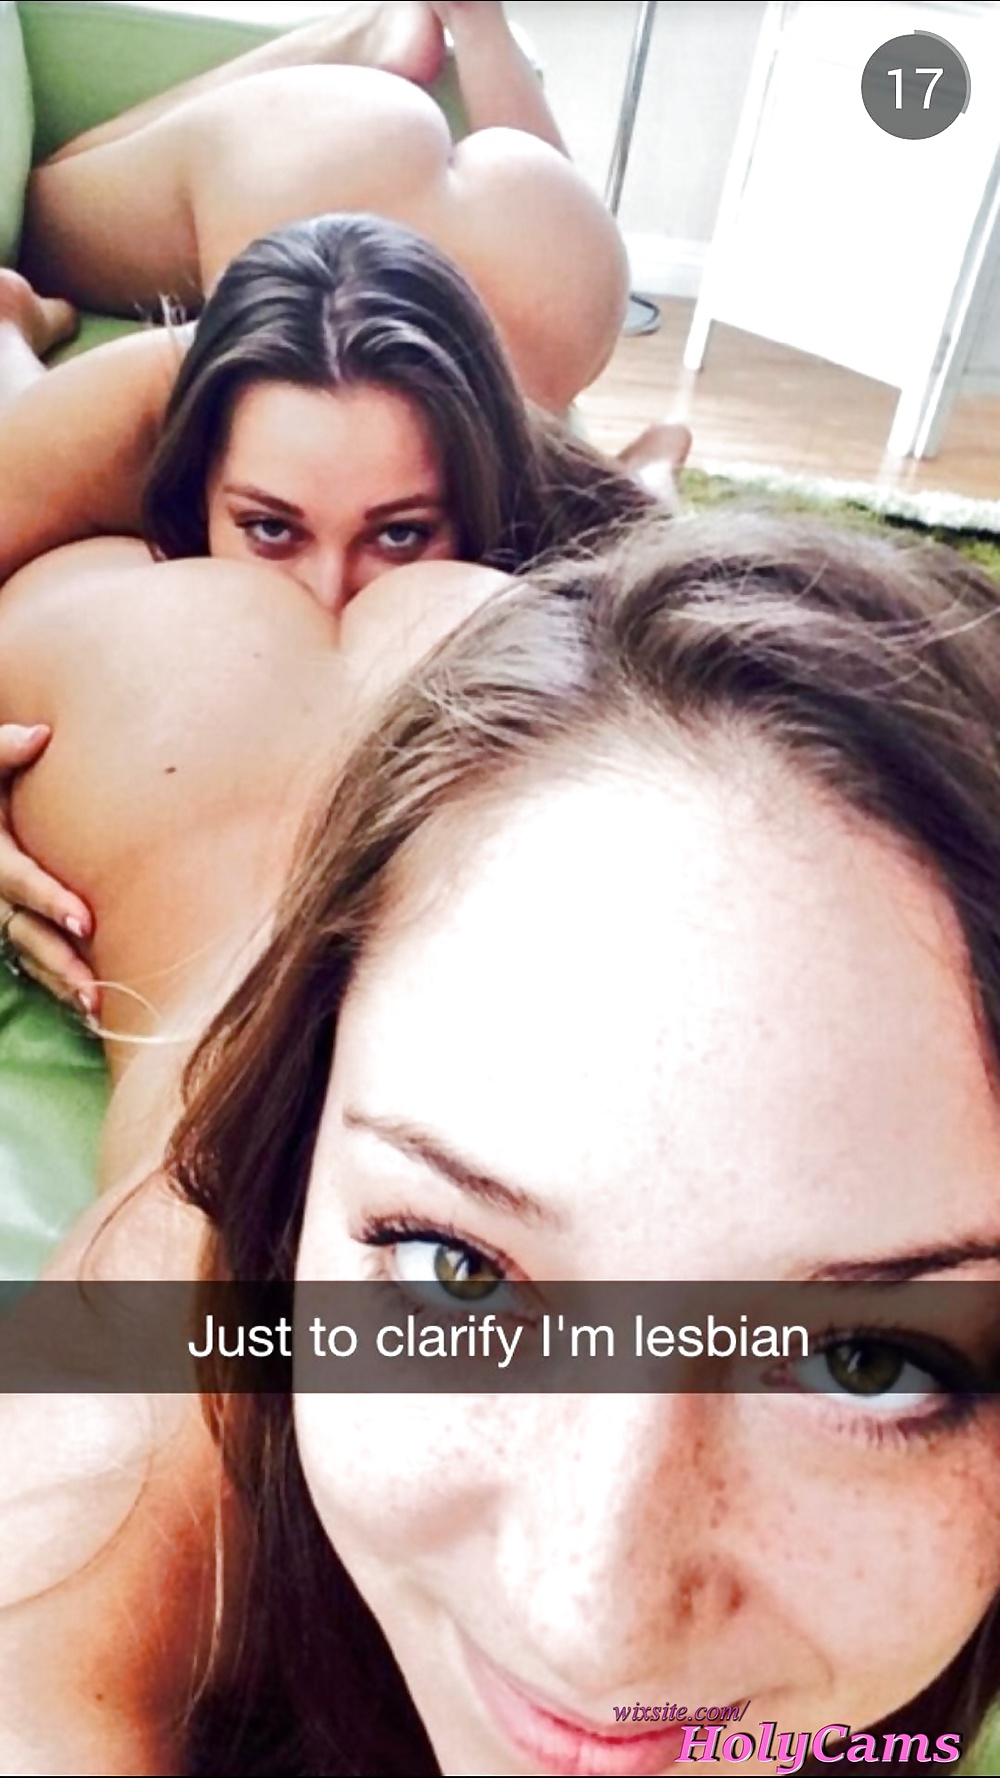 Lesbians on snapchat